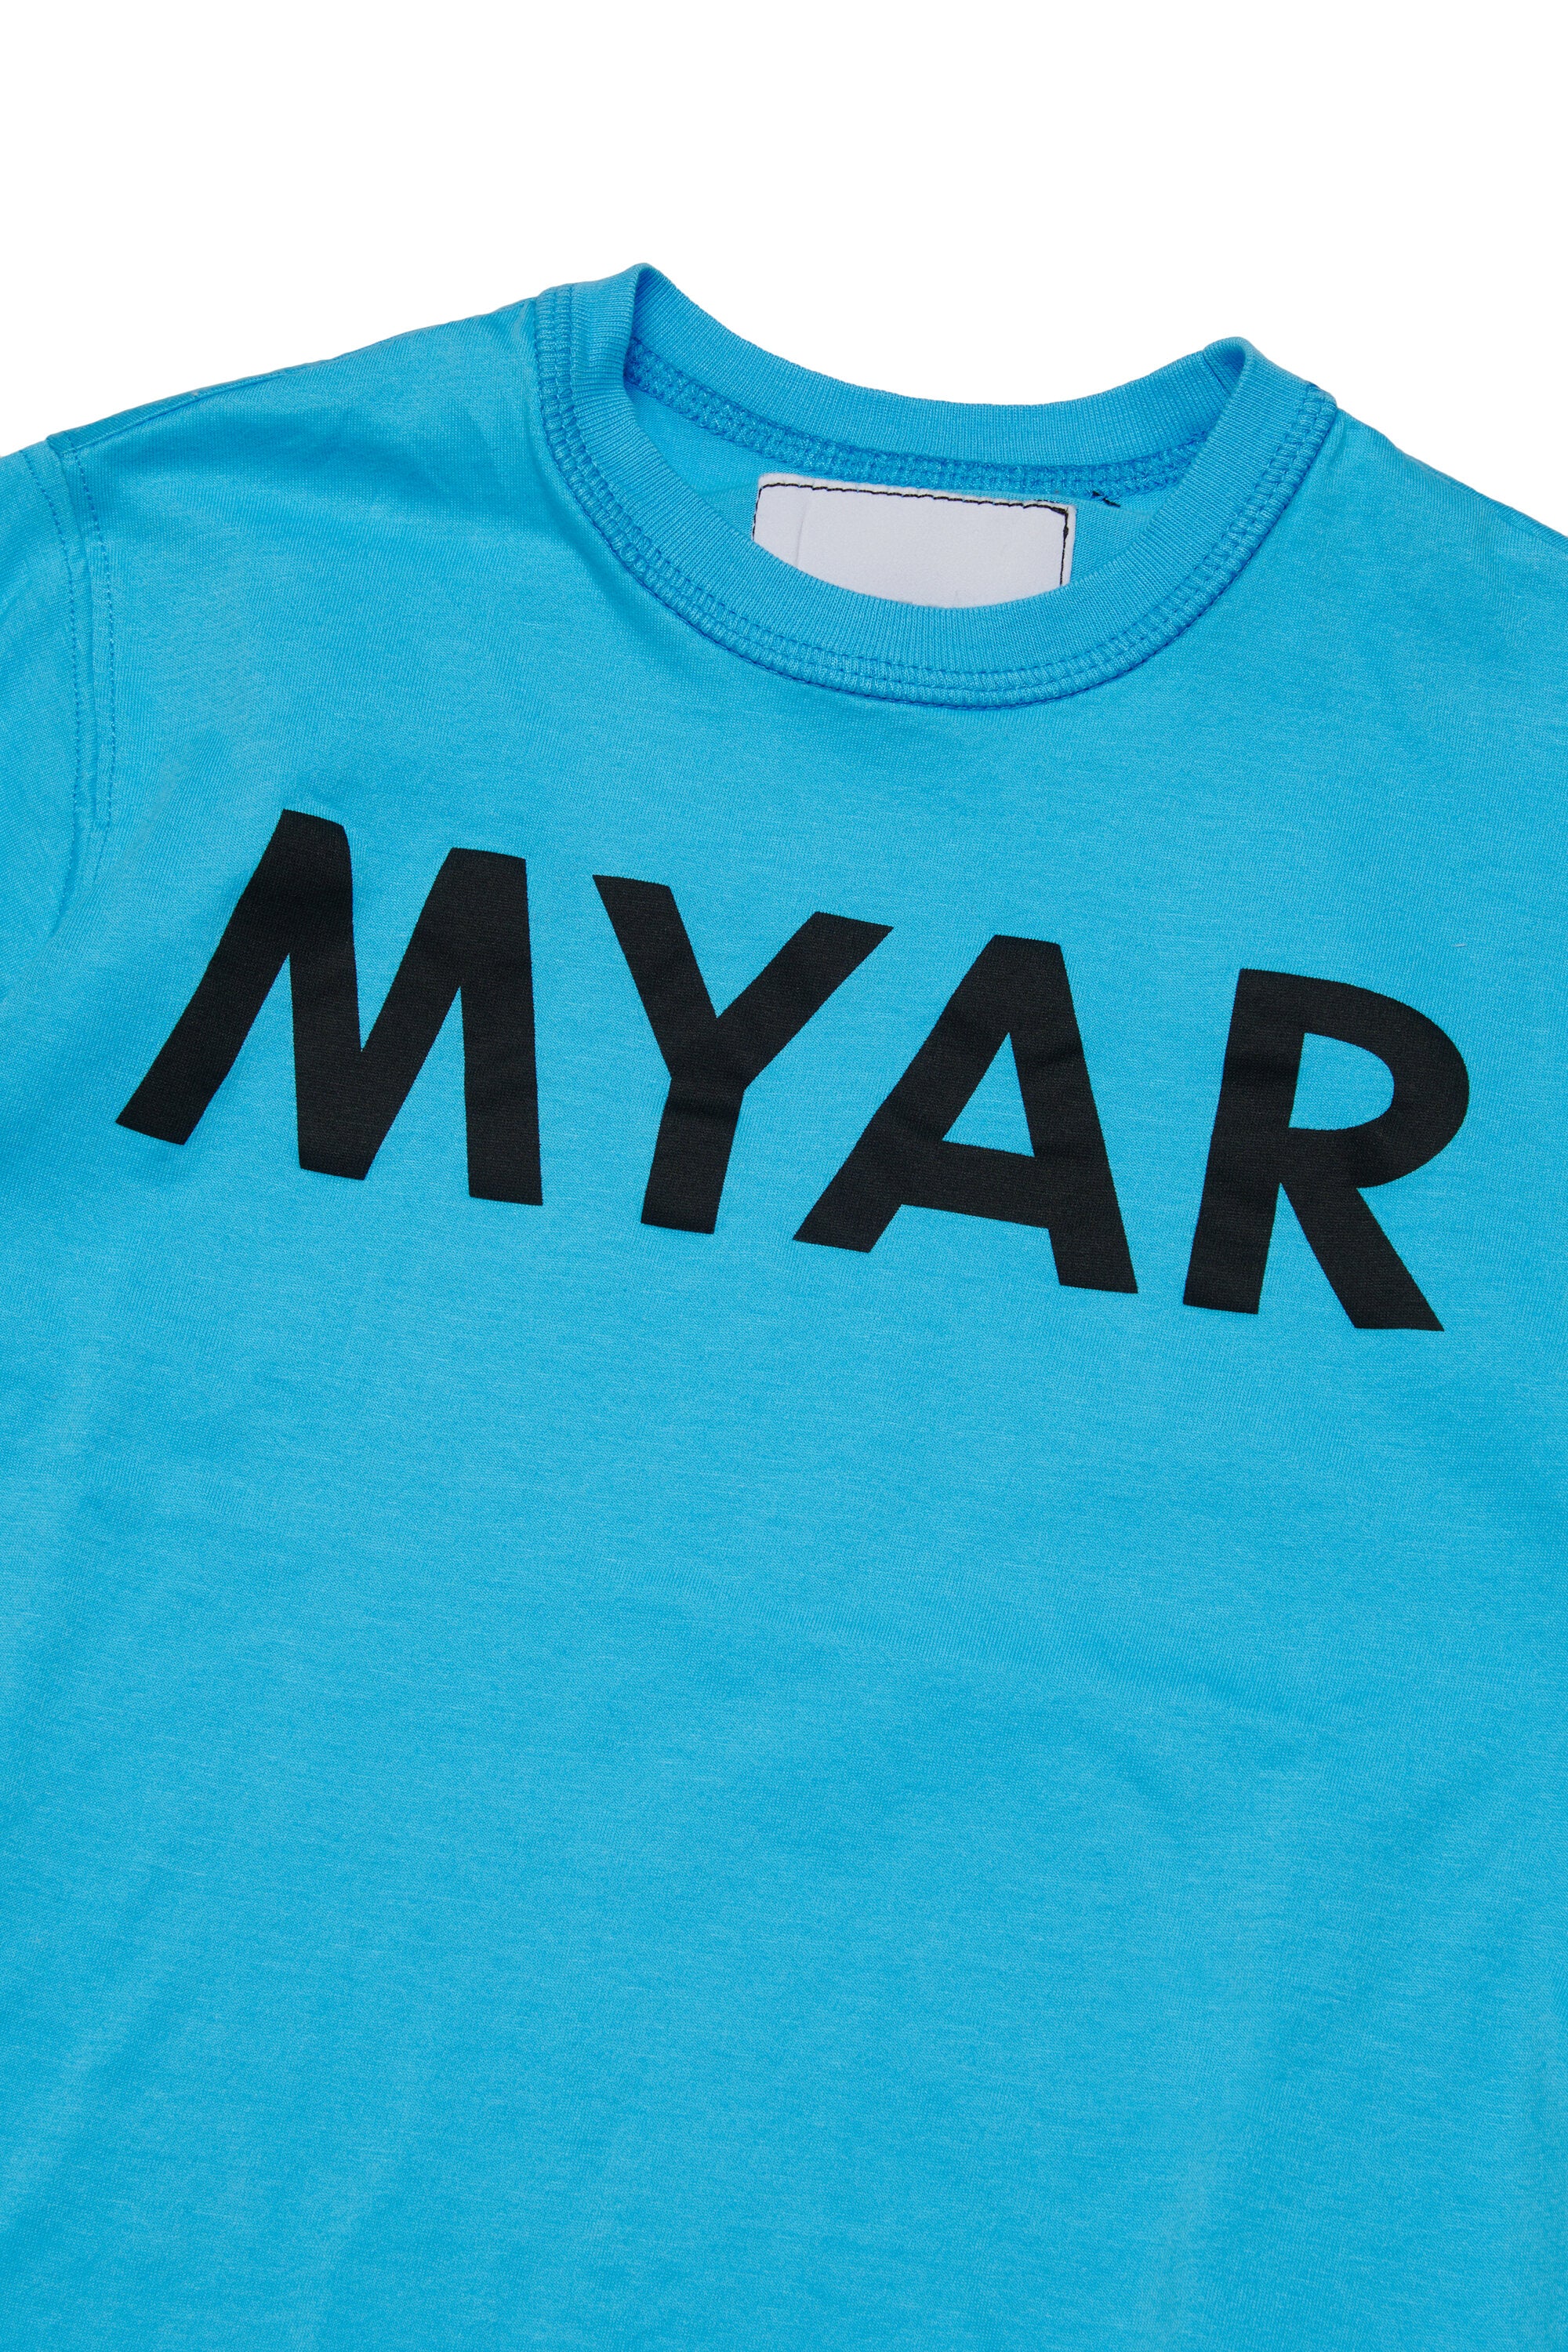 T-shirt in cotone deadstock con logo MYAR